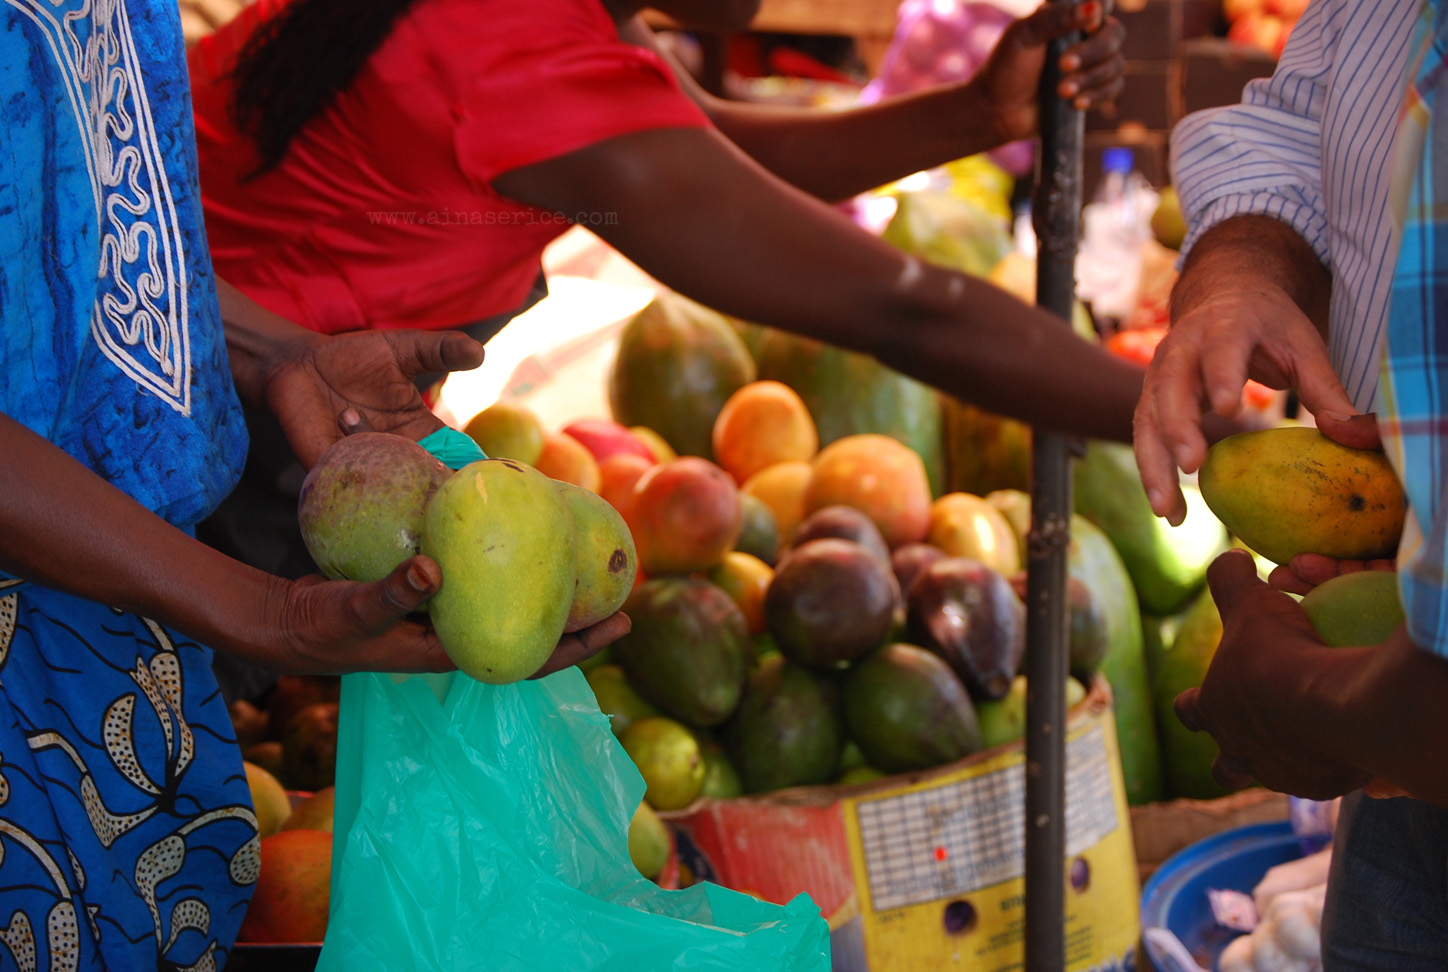 Mangoes-a-buying in Nakasero market, Kampala